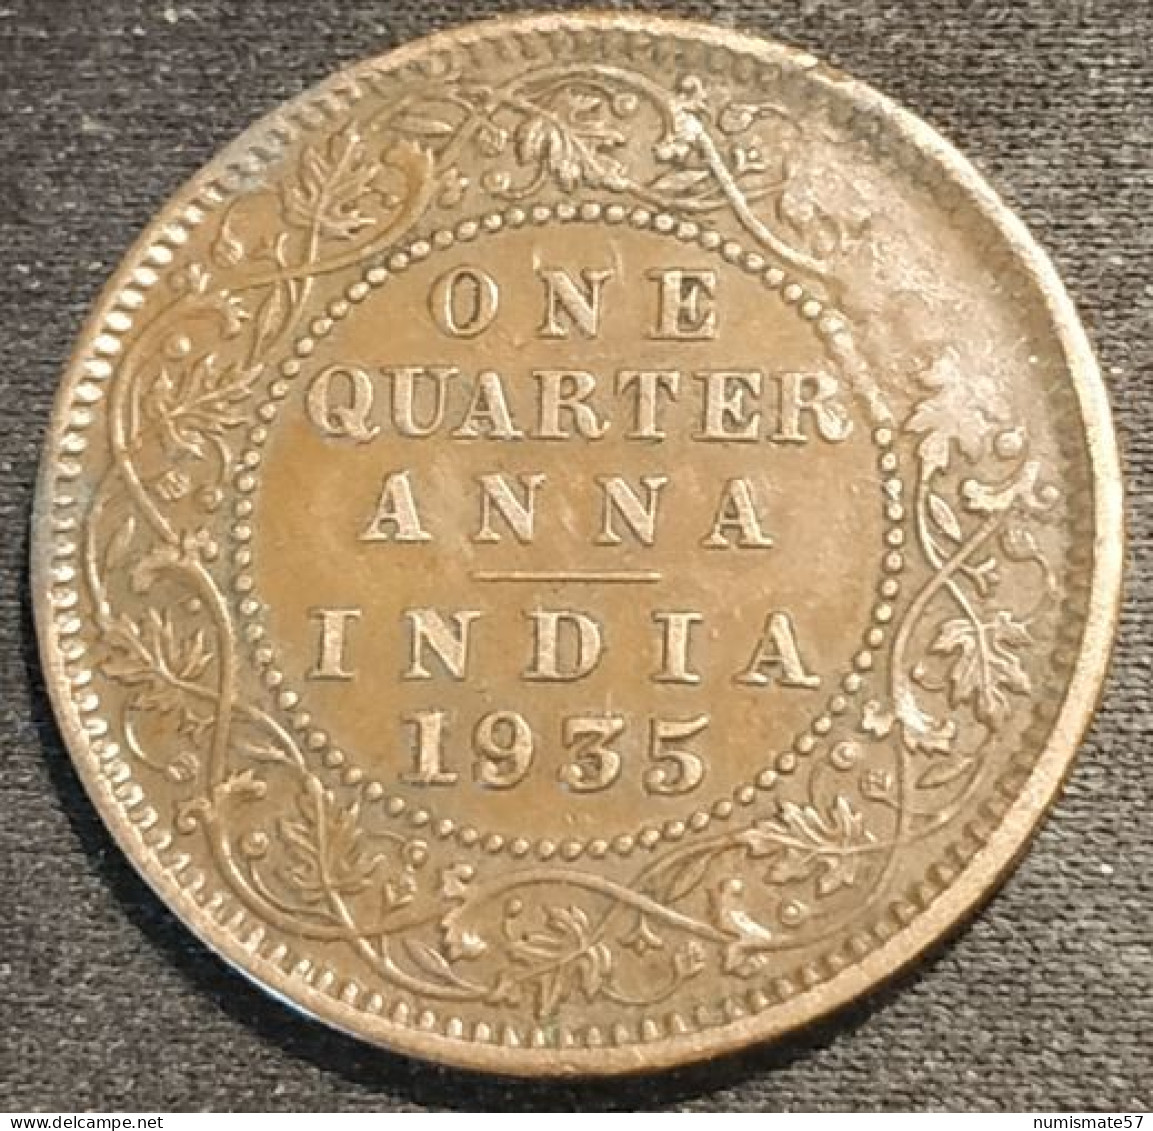 INDE - INDIA - ¼ - 1/4 ANNA 1935 - George V - KM 512 - ( ONE QUARTER ANNA ) - Indien